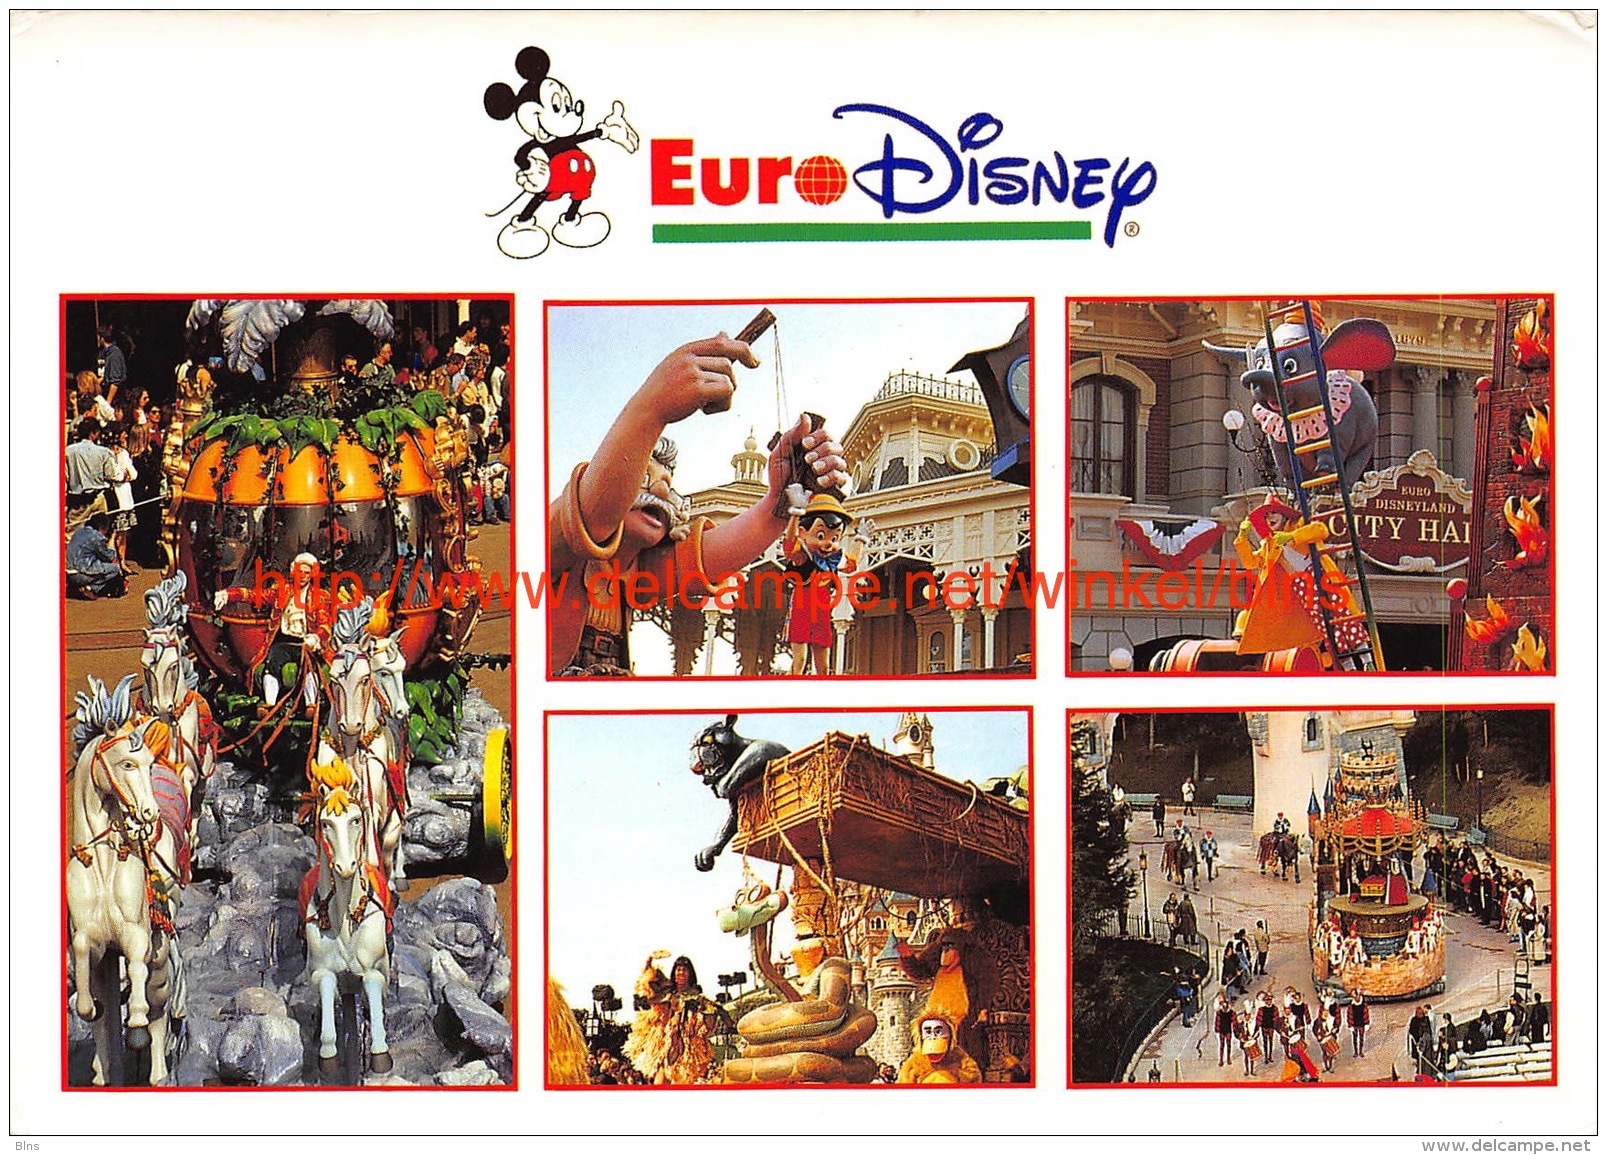 Euro Disney Parade - Disneyland